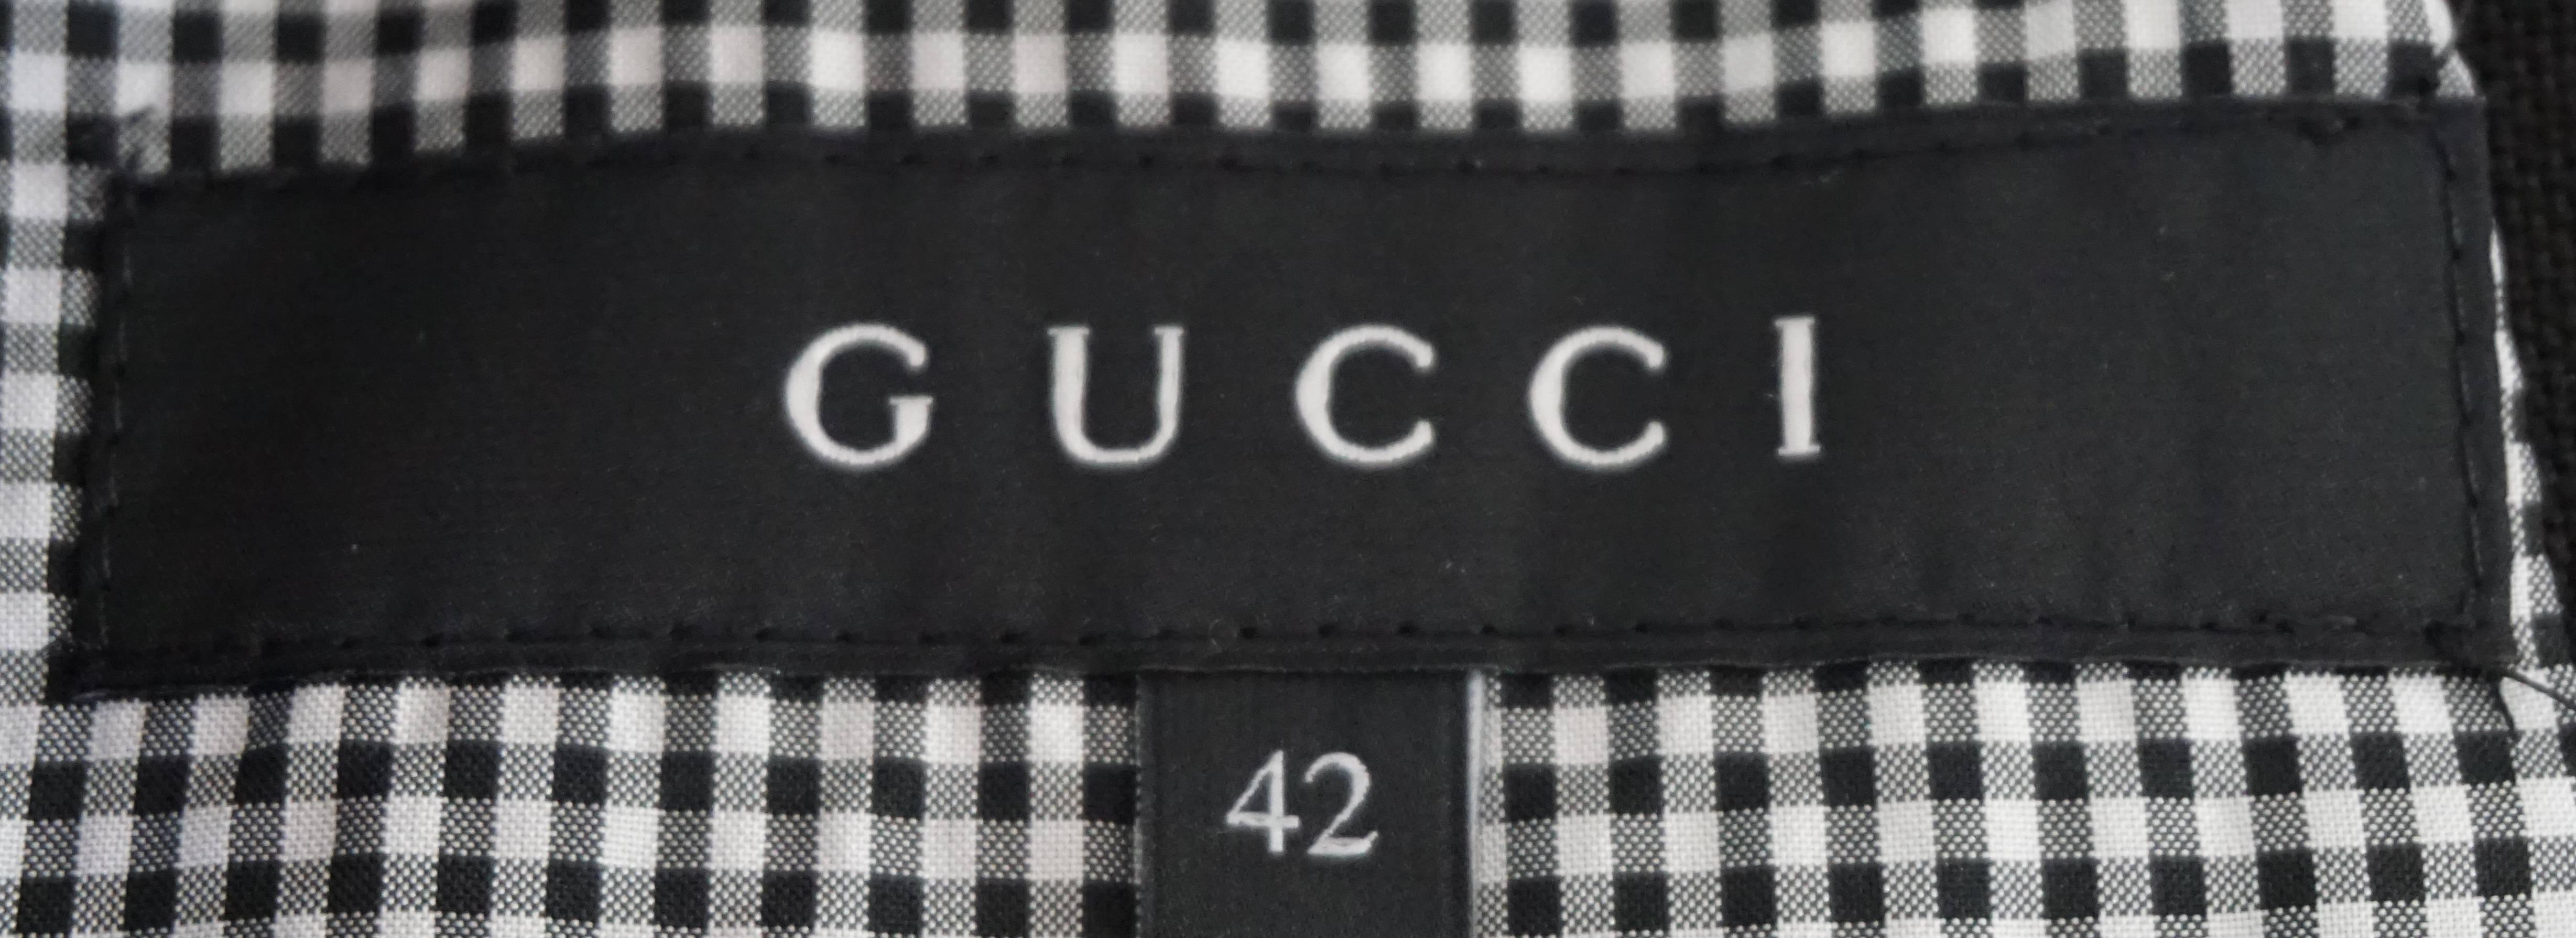 Gucci Black Coat Dress - 42 - NWT 2